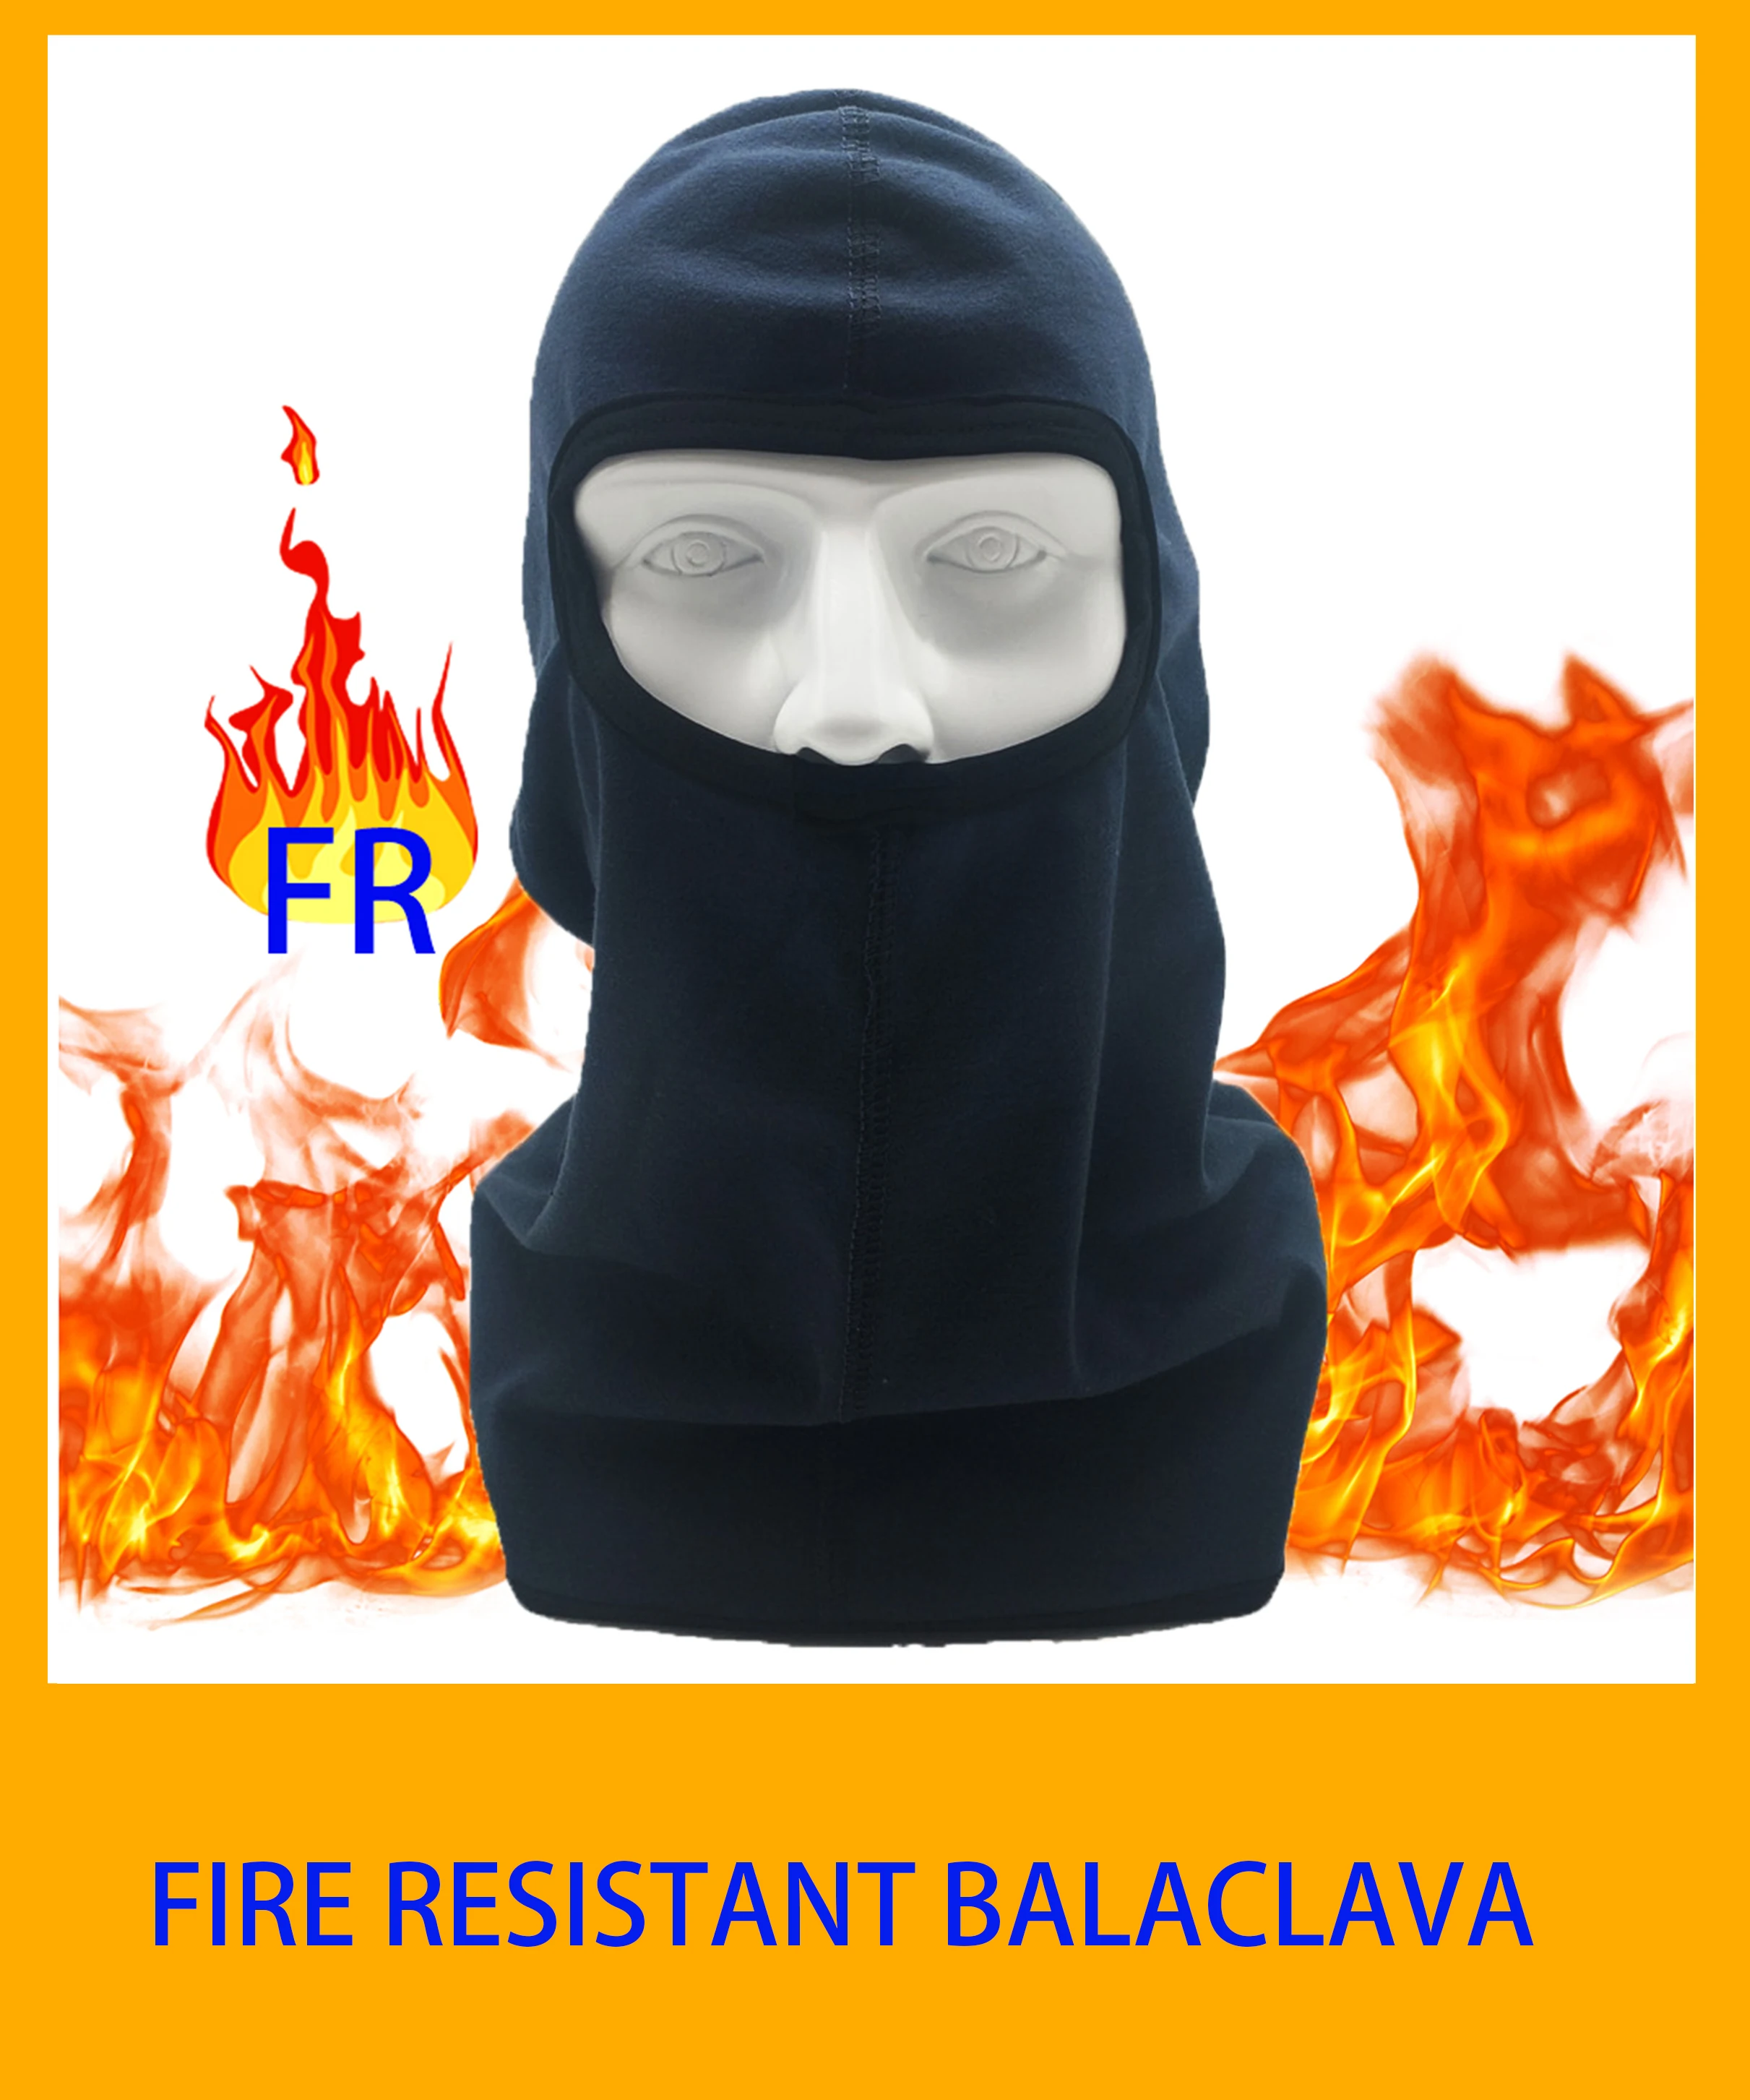 Jxrodekz Welding Its Like Sewing with Fire Full Face Mask Dust Protection Headwear Balaclava 